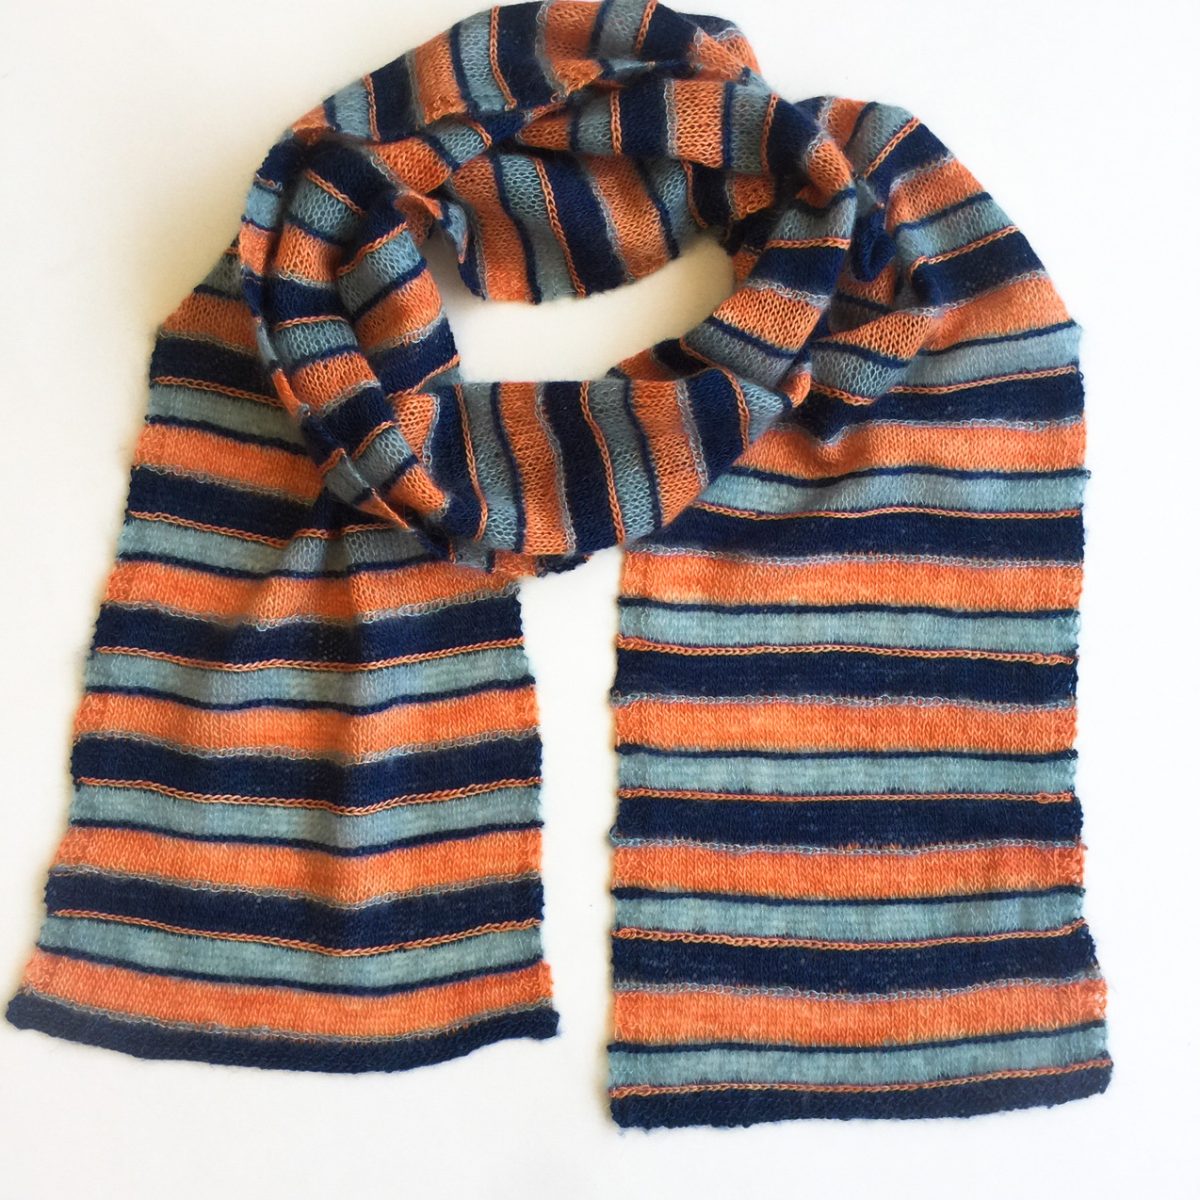 Stripe Away Scarf free knit pattern by Cowgirlblues